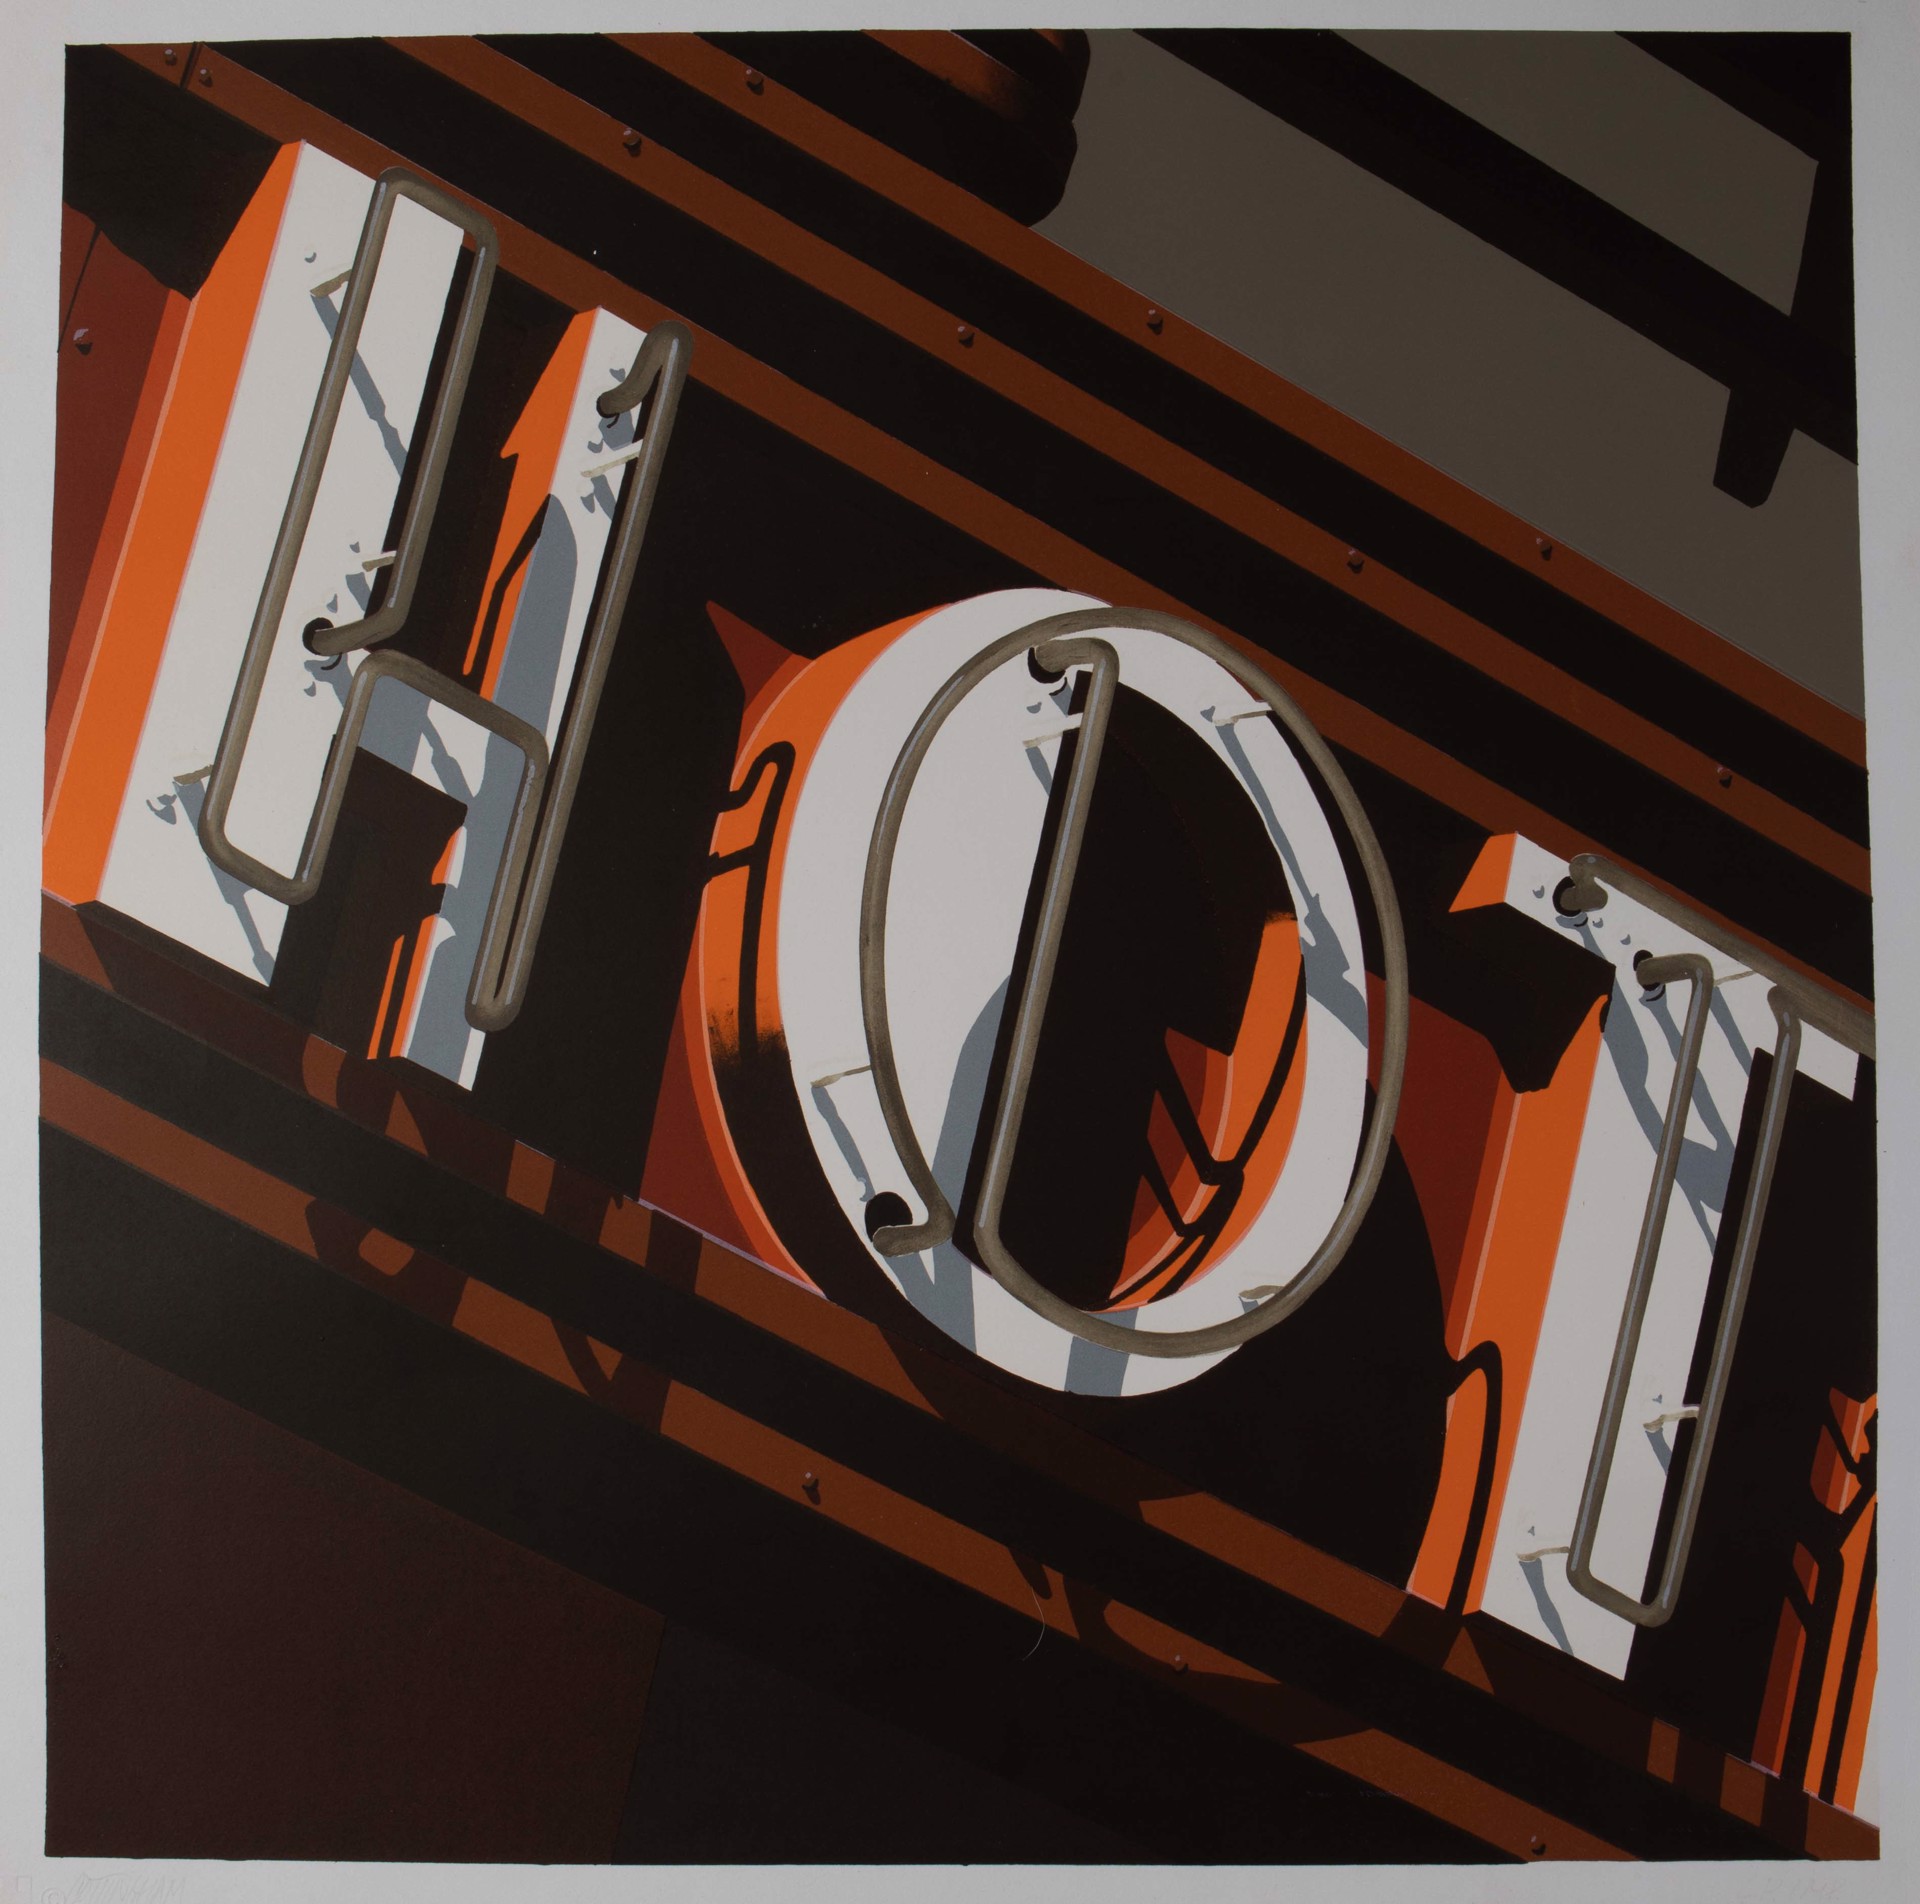 Hot by Robert Cottingham